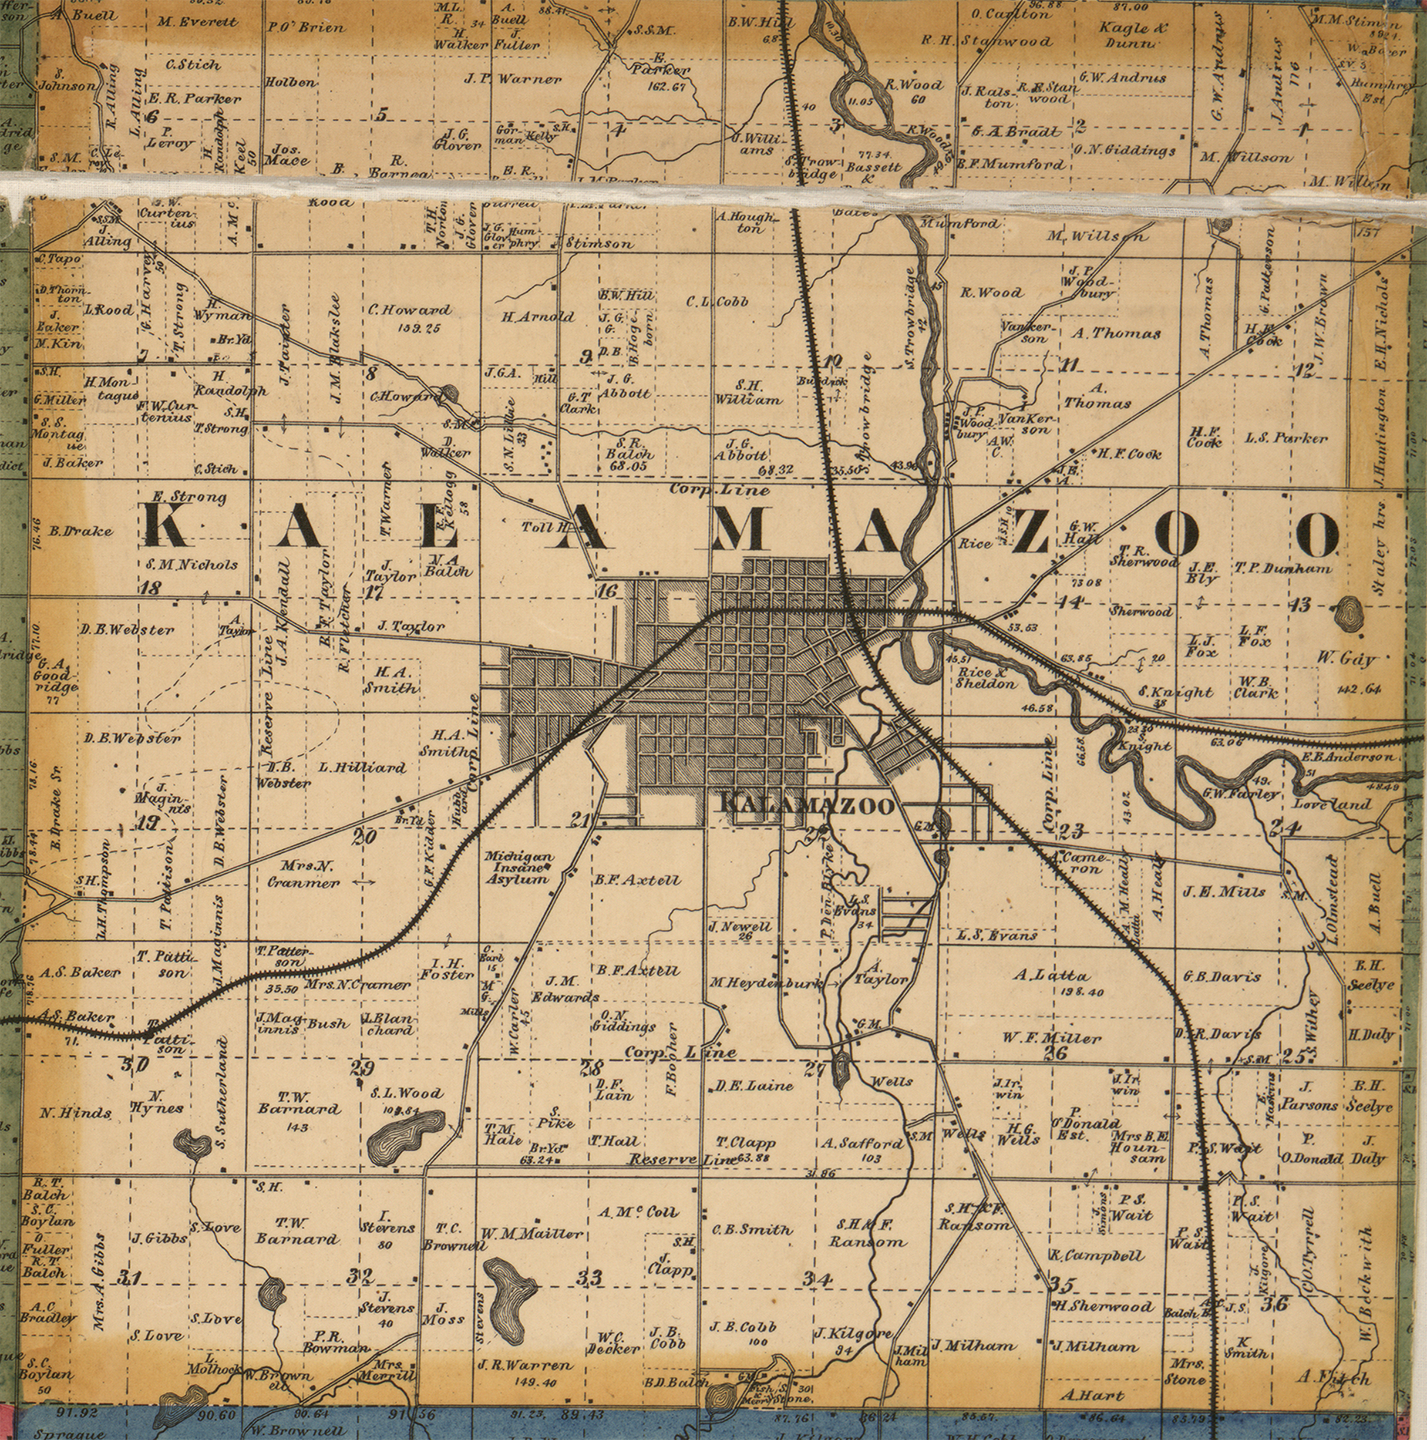 1861 Kalamazoo Township Michigan landownership map